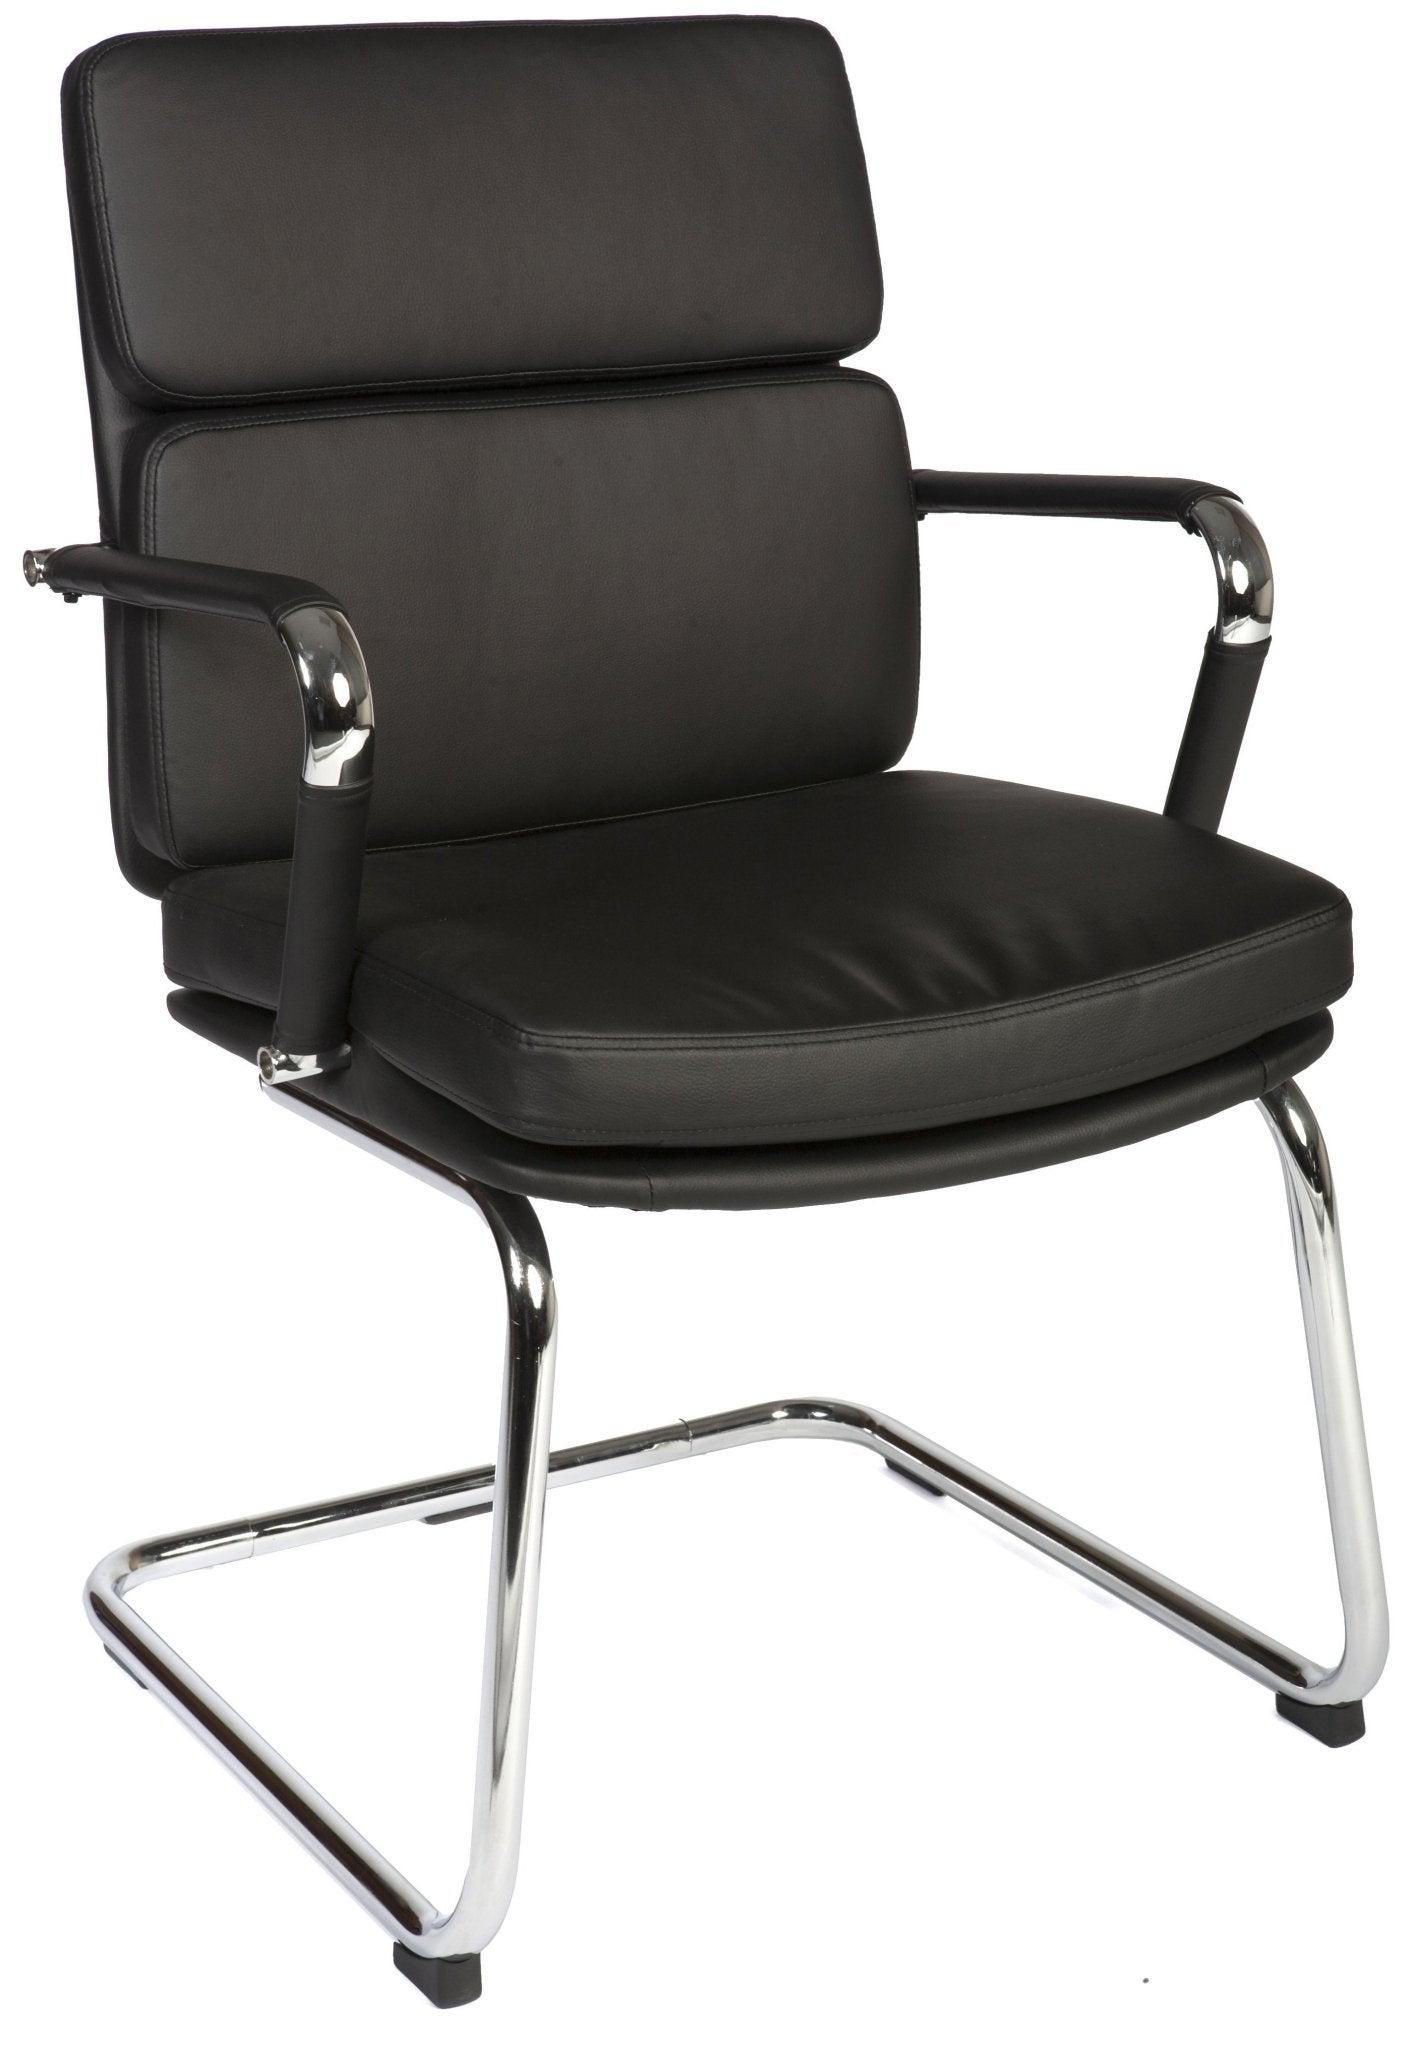 Deco visitor reception chair (black) - crimblefest furniture - image 1